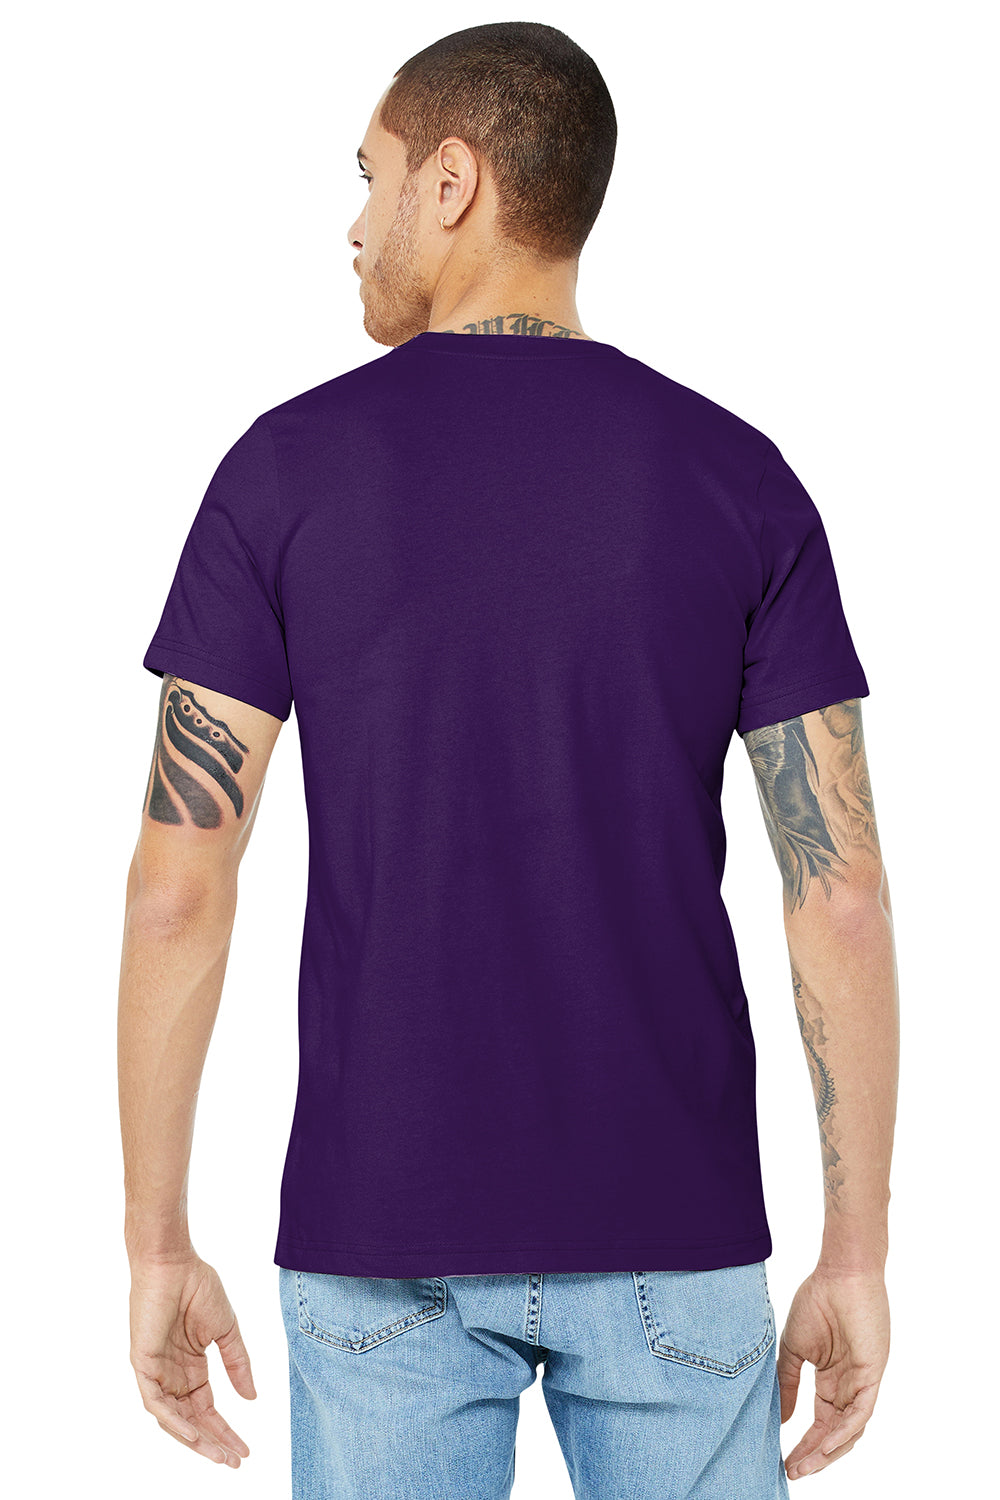 Bella + Canvas BC3001/3001C Mens Jersey Short Sleeve Crewneck T-Shirt Team Purple Model Back